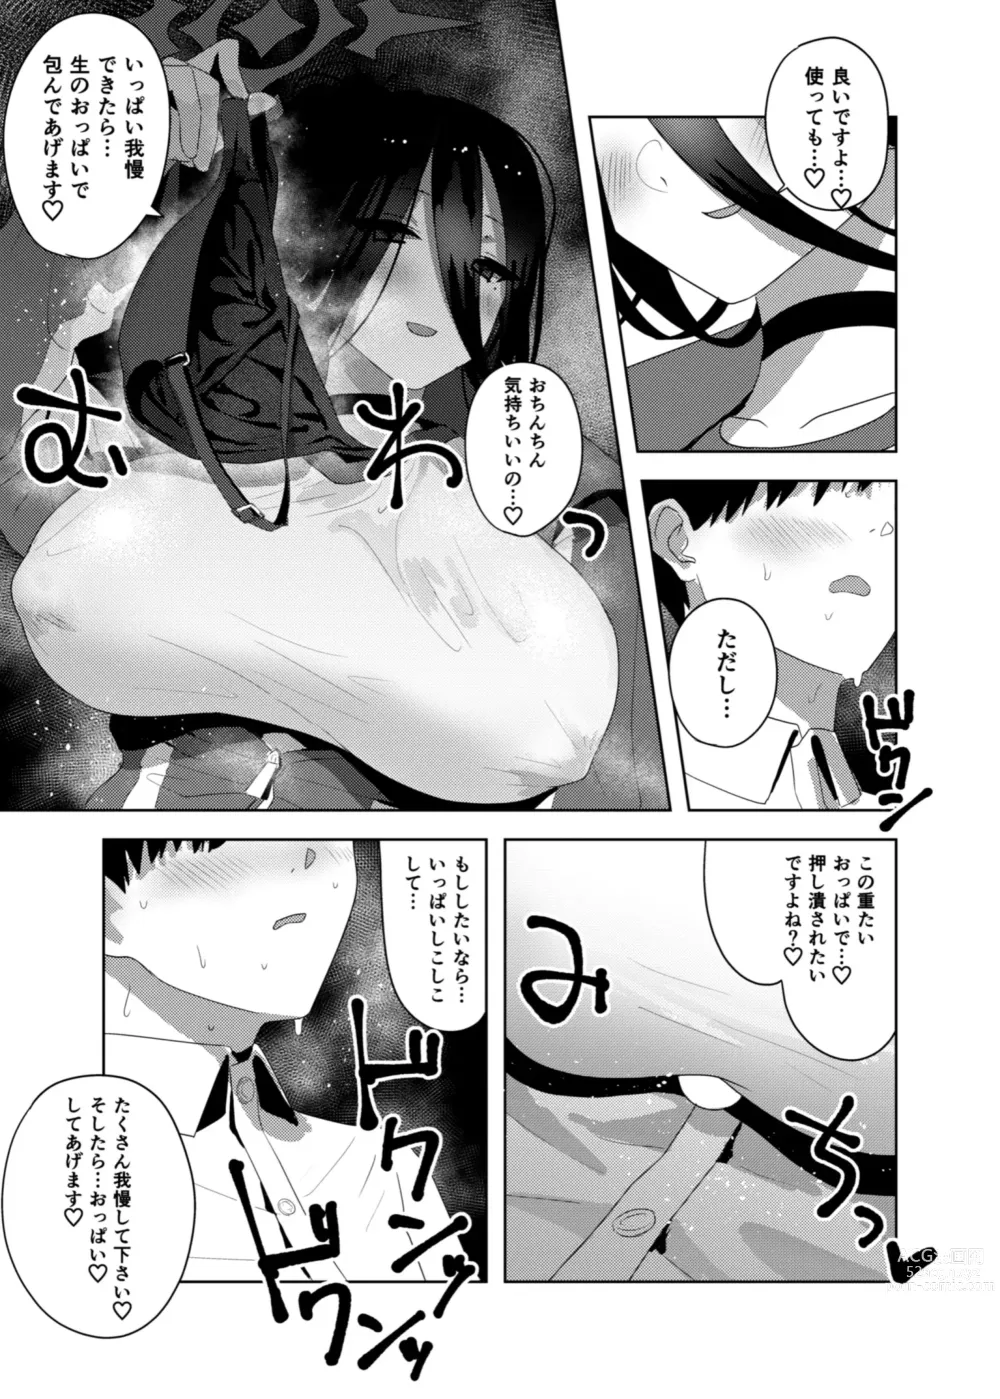 Page 10 of imageset 長い